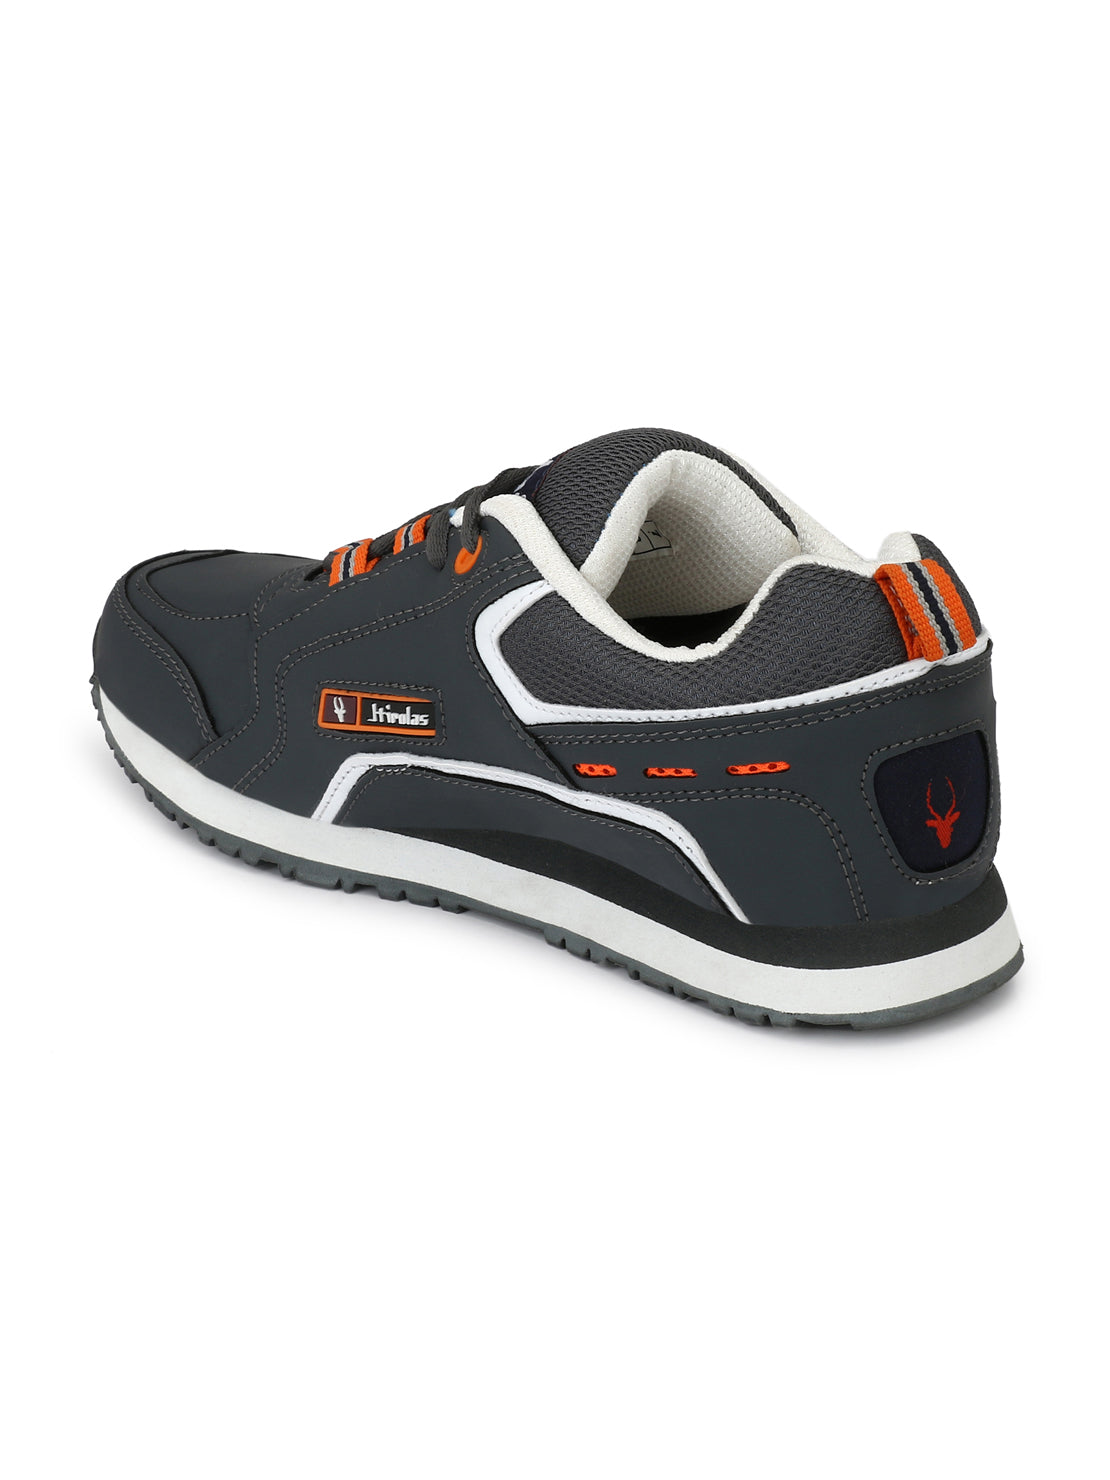 Hirolas® Men's Multisports Shock Absorbing Walking Running Fitness Athletic Training Gym Grey Lace Up Sneaker Sport Shoes (HRL2041G)